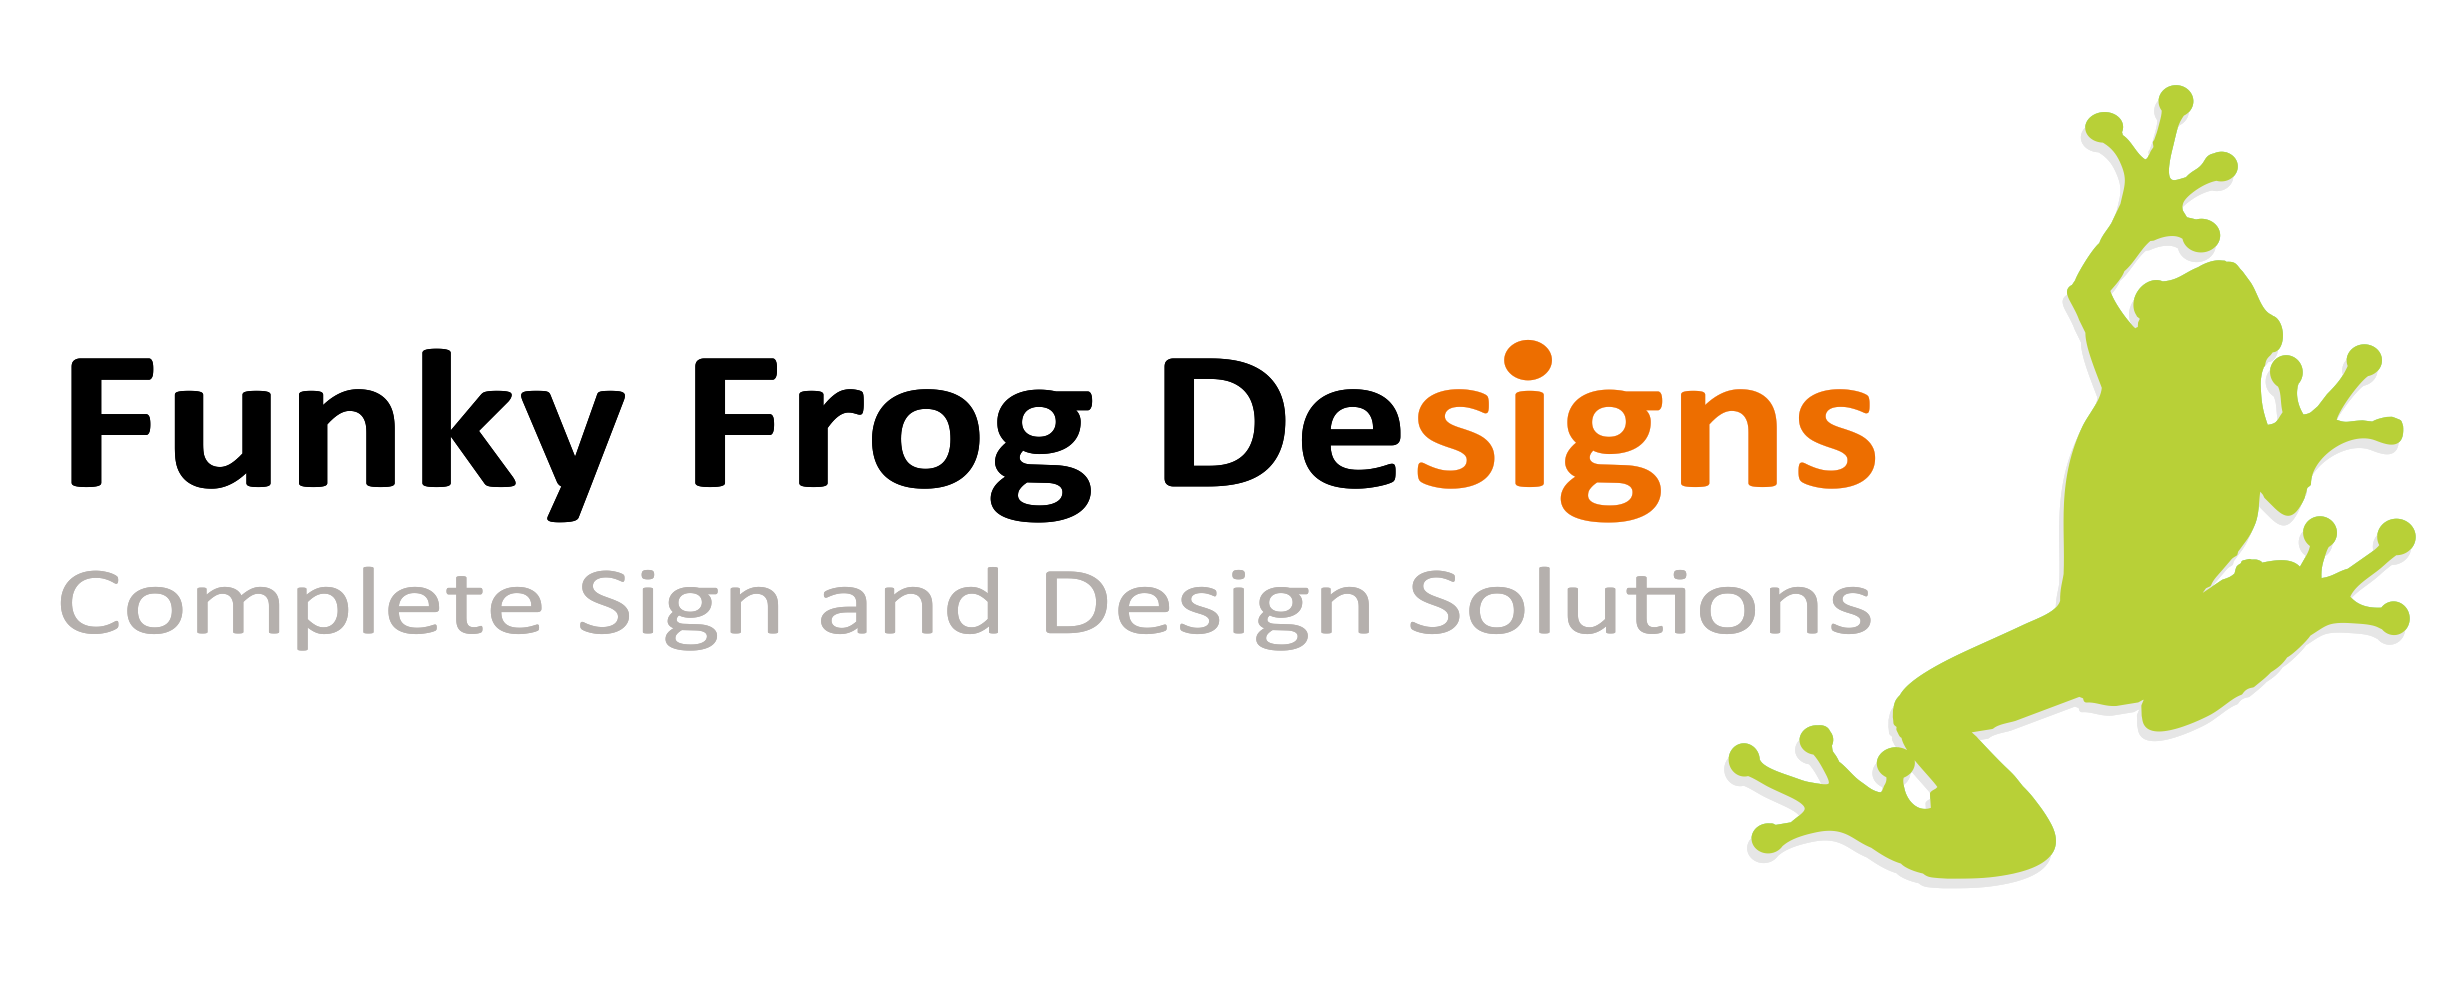 Funky frog designs